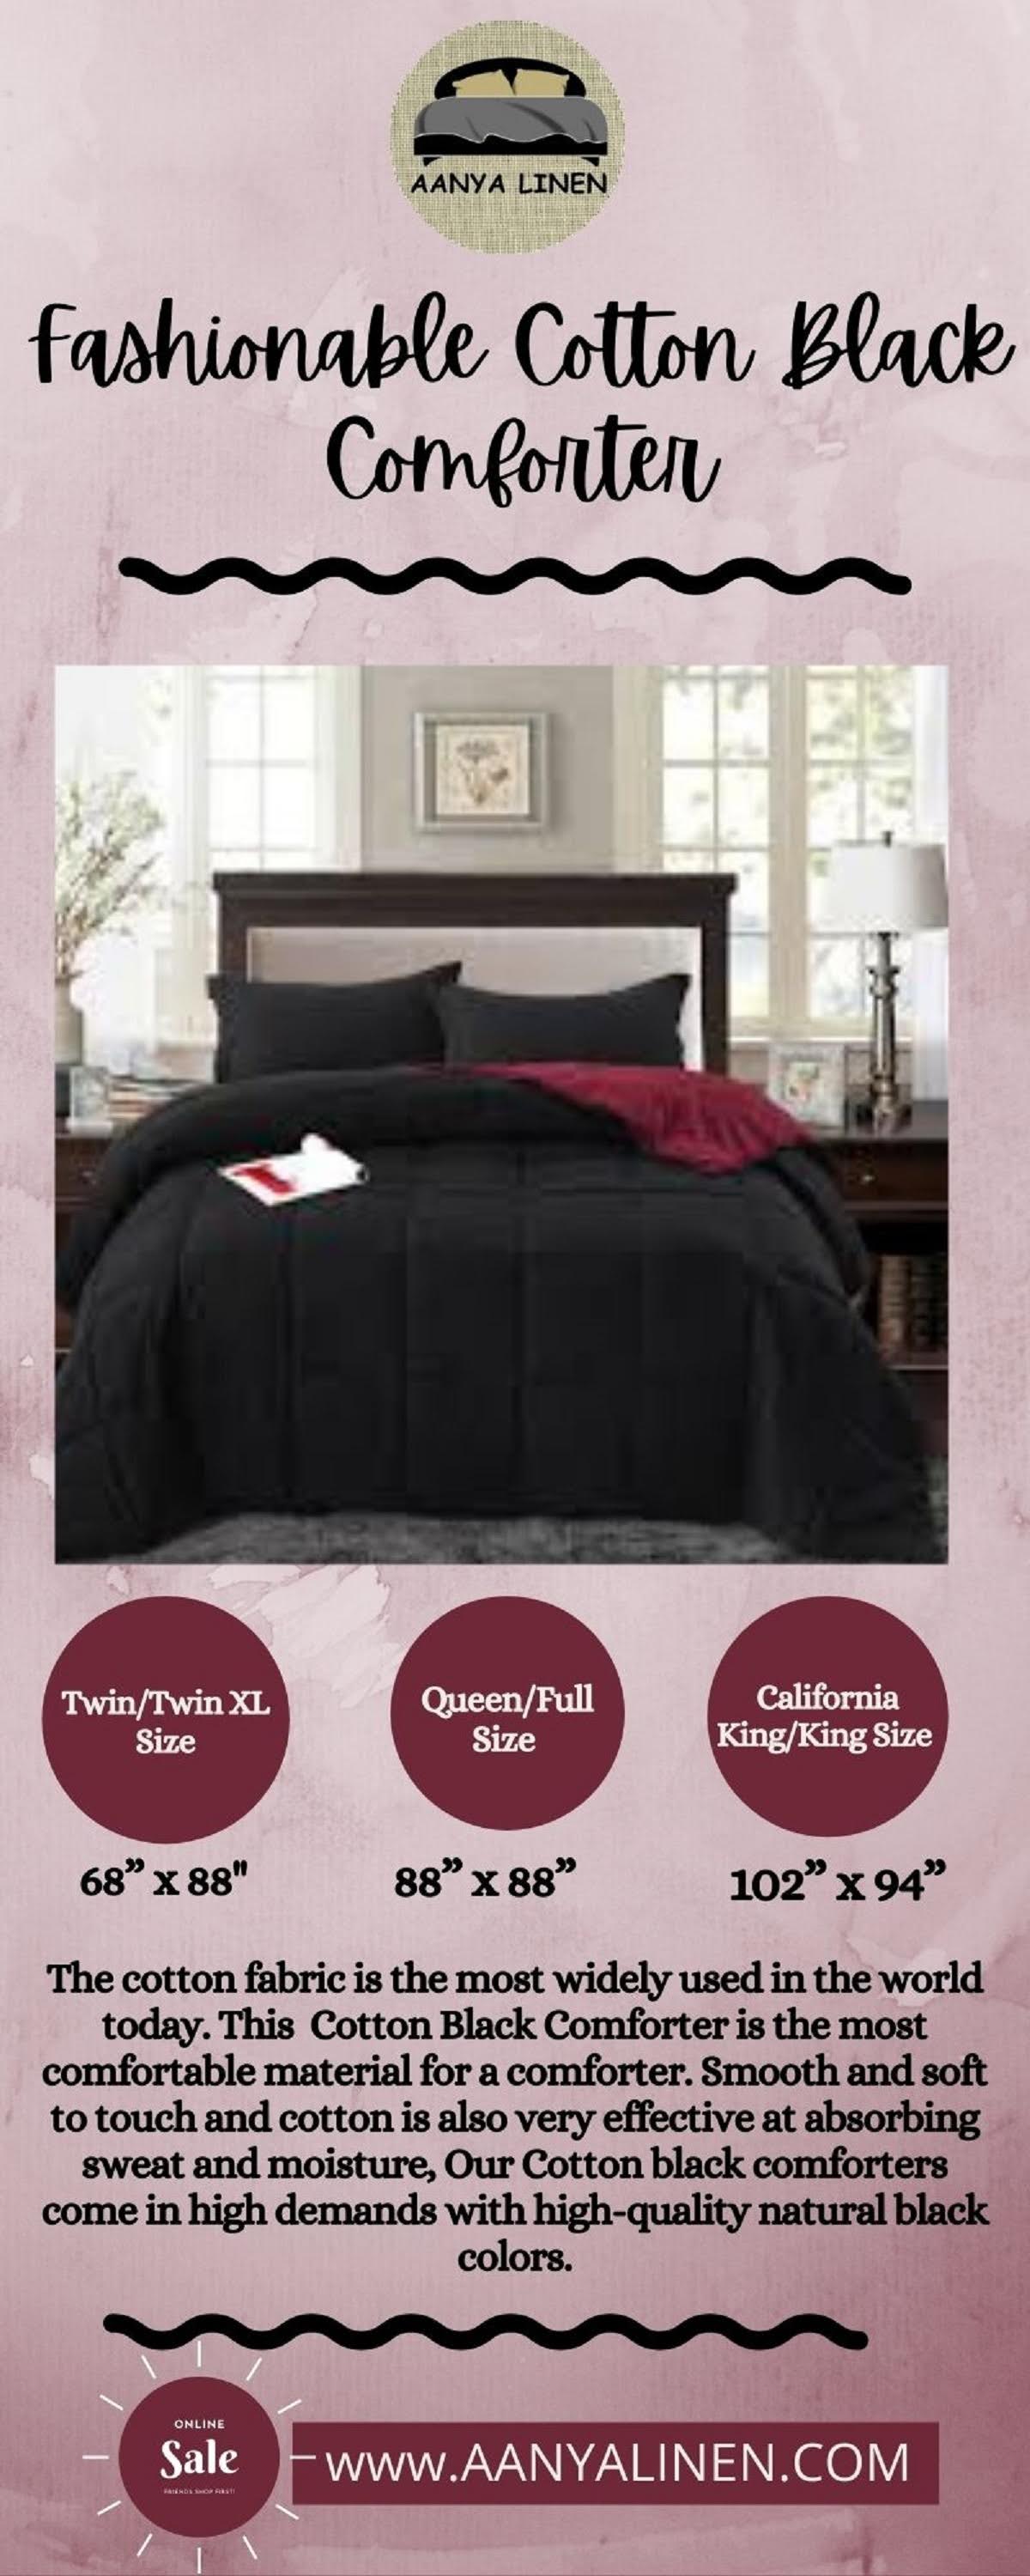 fashionable-cotton-black-comforter-infographic